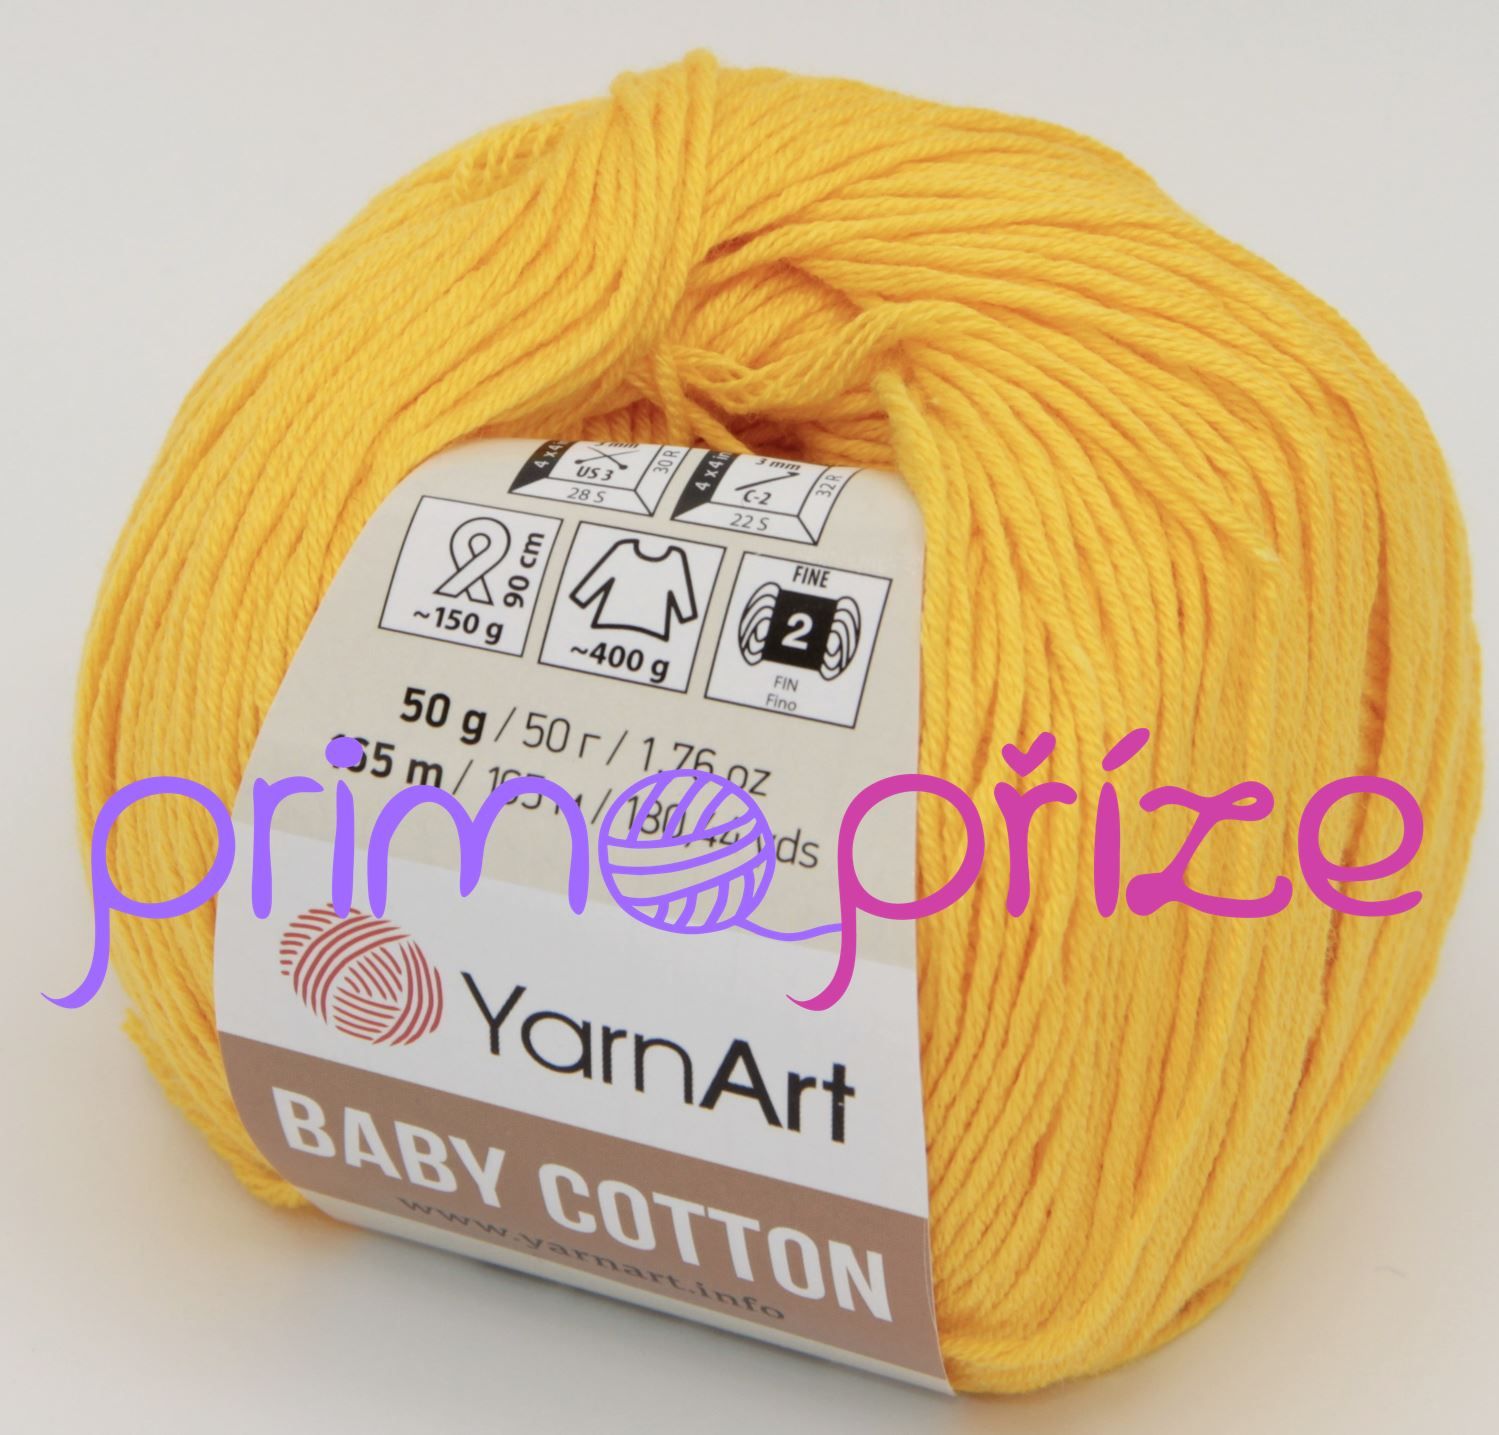 YarnArt Baby Cotton 432 zlatožlutá